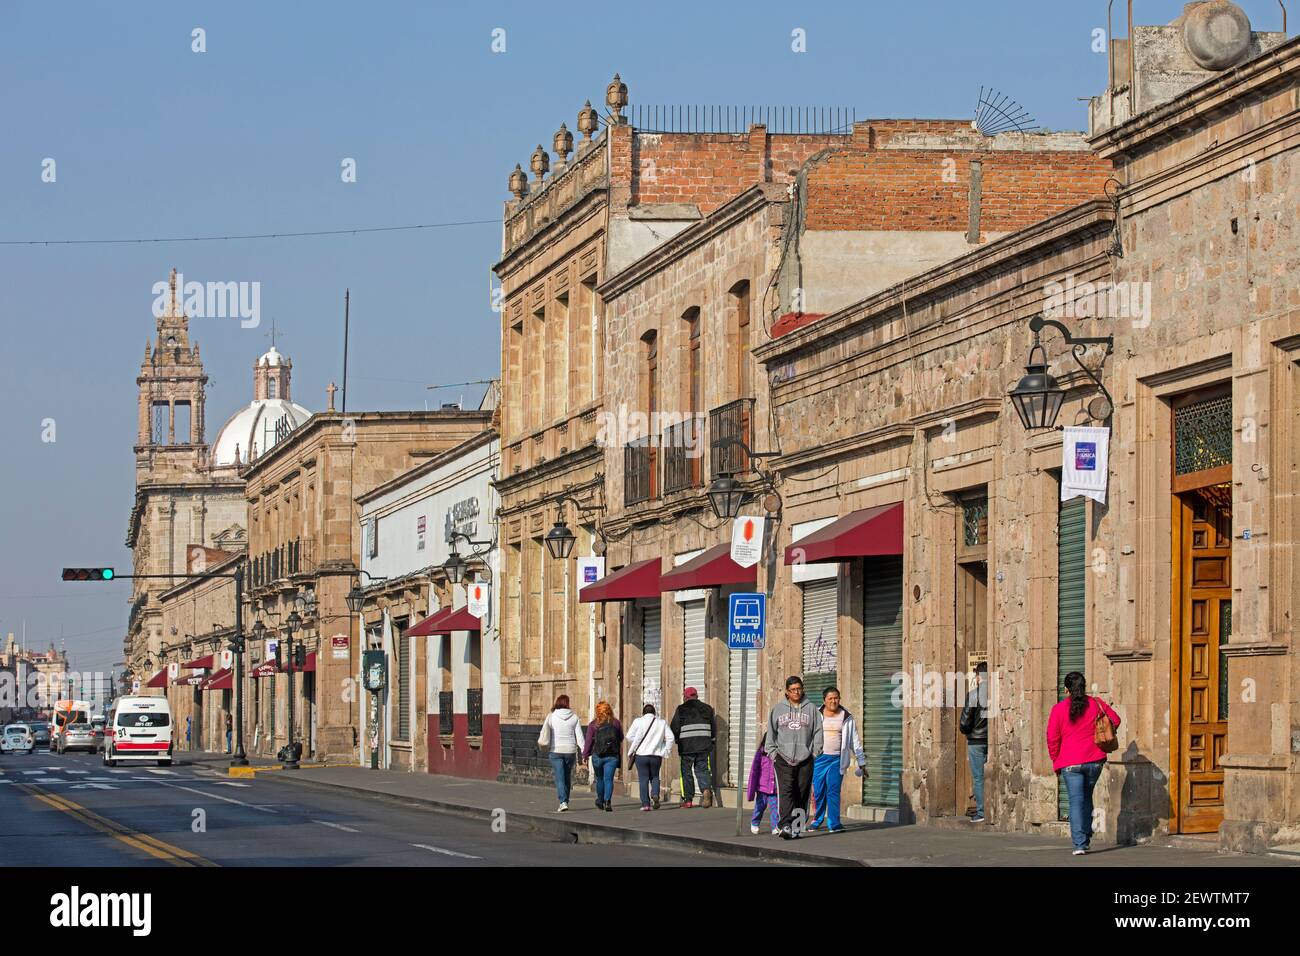 Bâtiments coloniaux sur l'Avenida Francisco I. Madero, rue principale de la ville Morelia, Michoacán, Mexique Banque D'Images